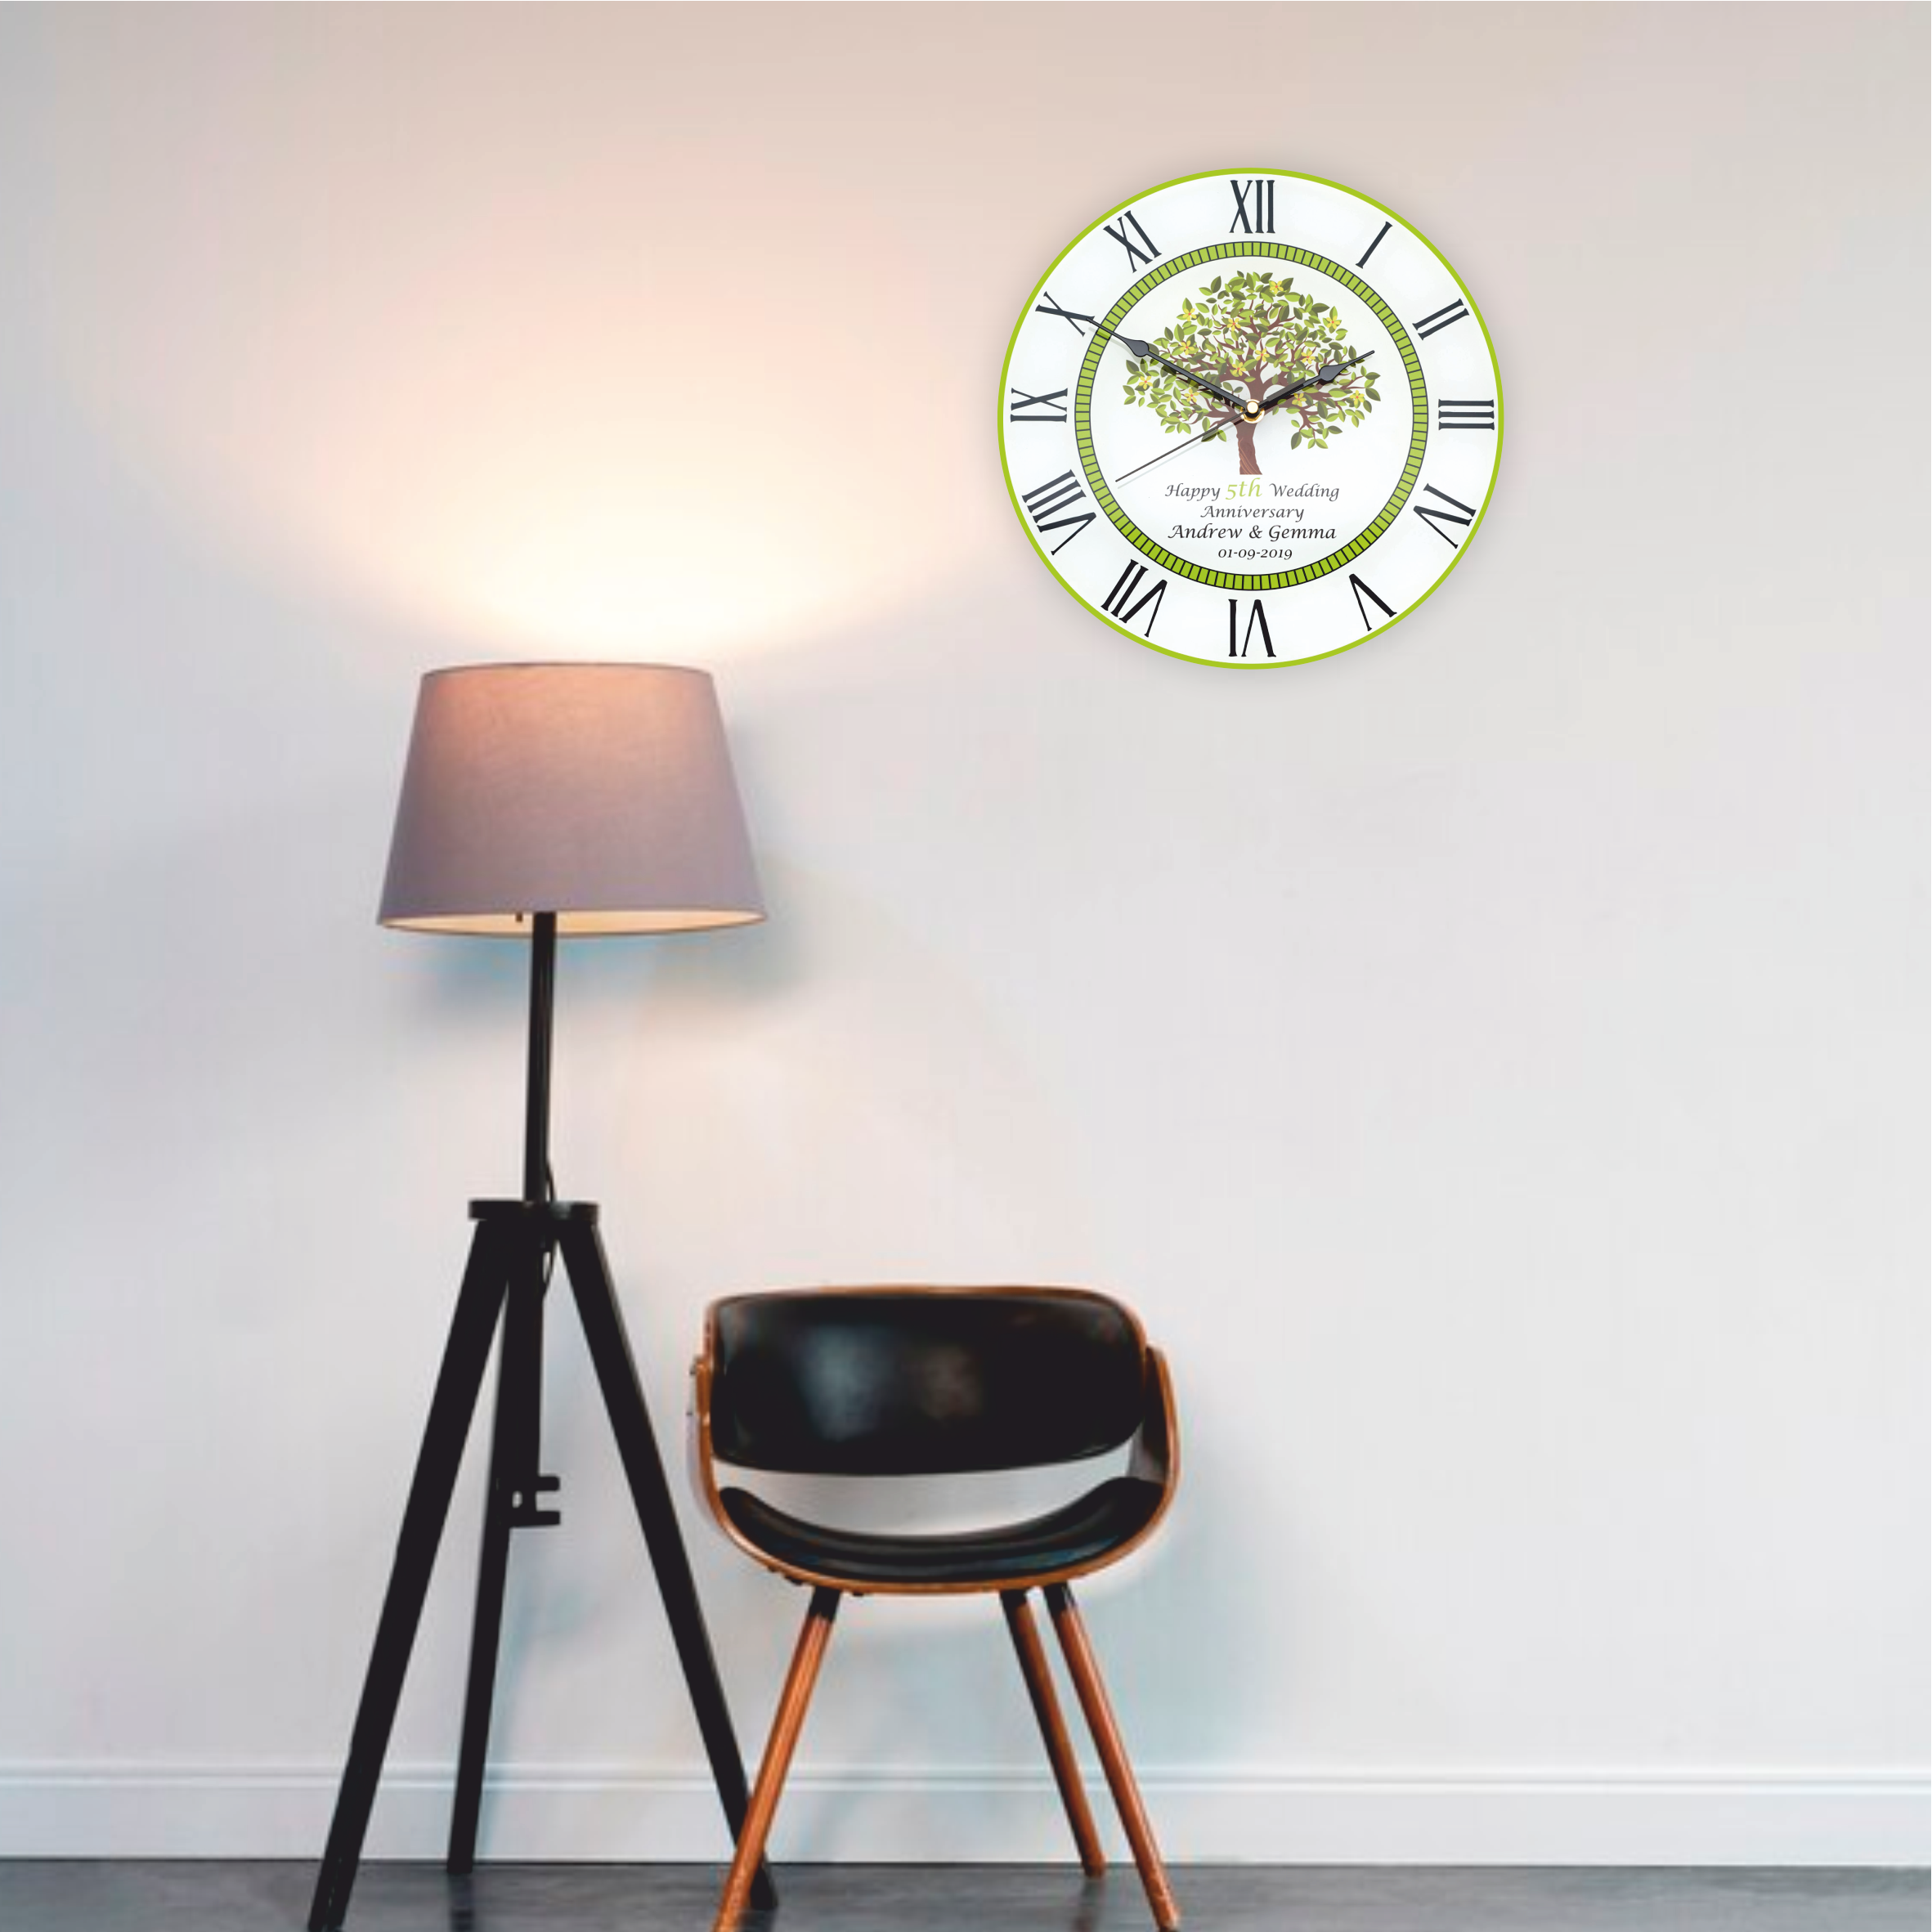 5th Wood Wedding Anniversary Clock - Bespoke Personalised Anniversary Gift (30cm Silent Clock)